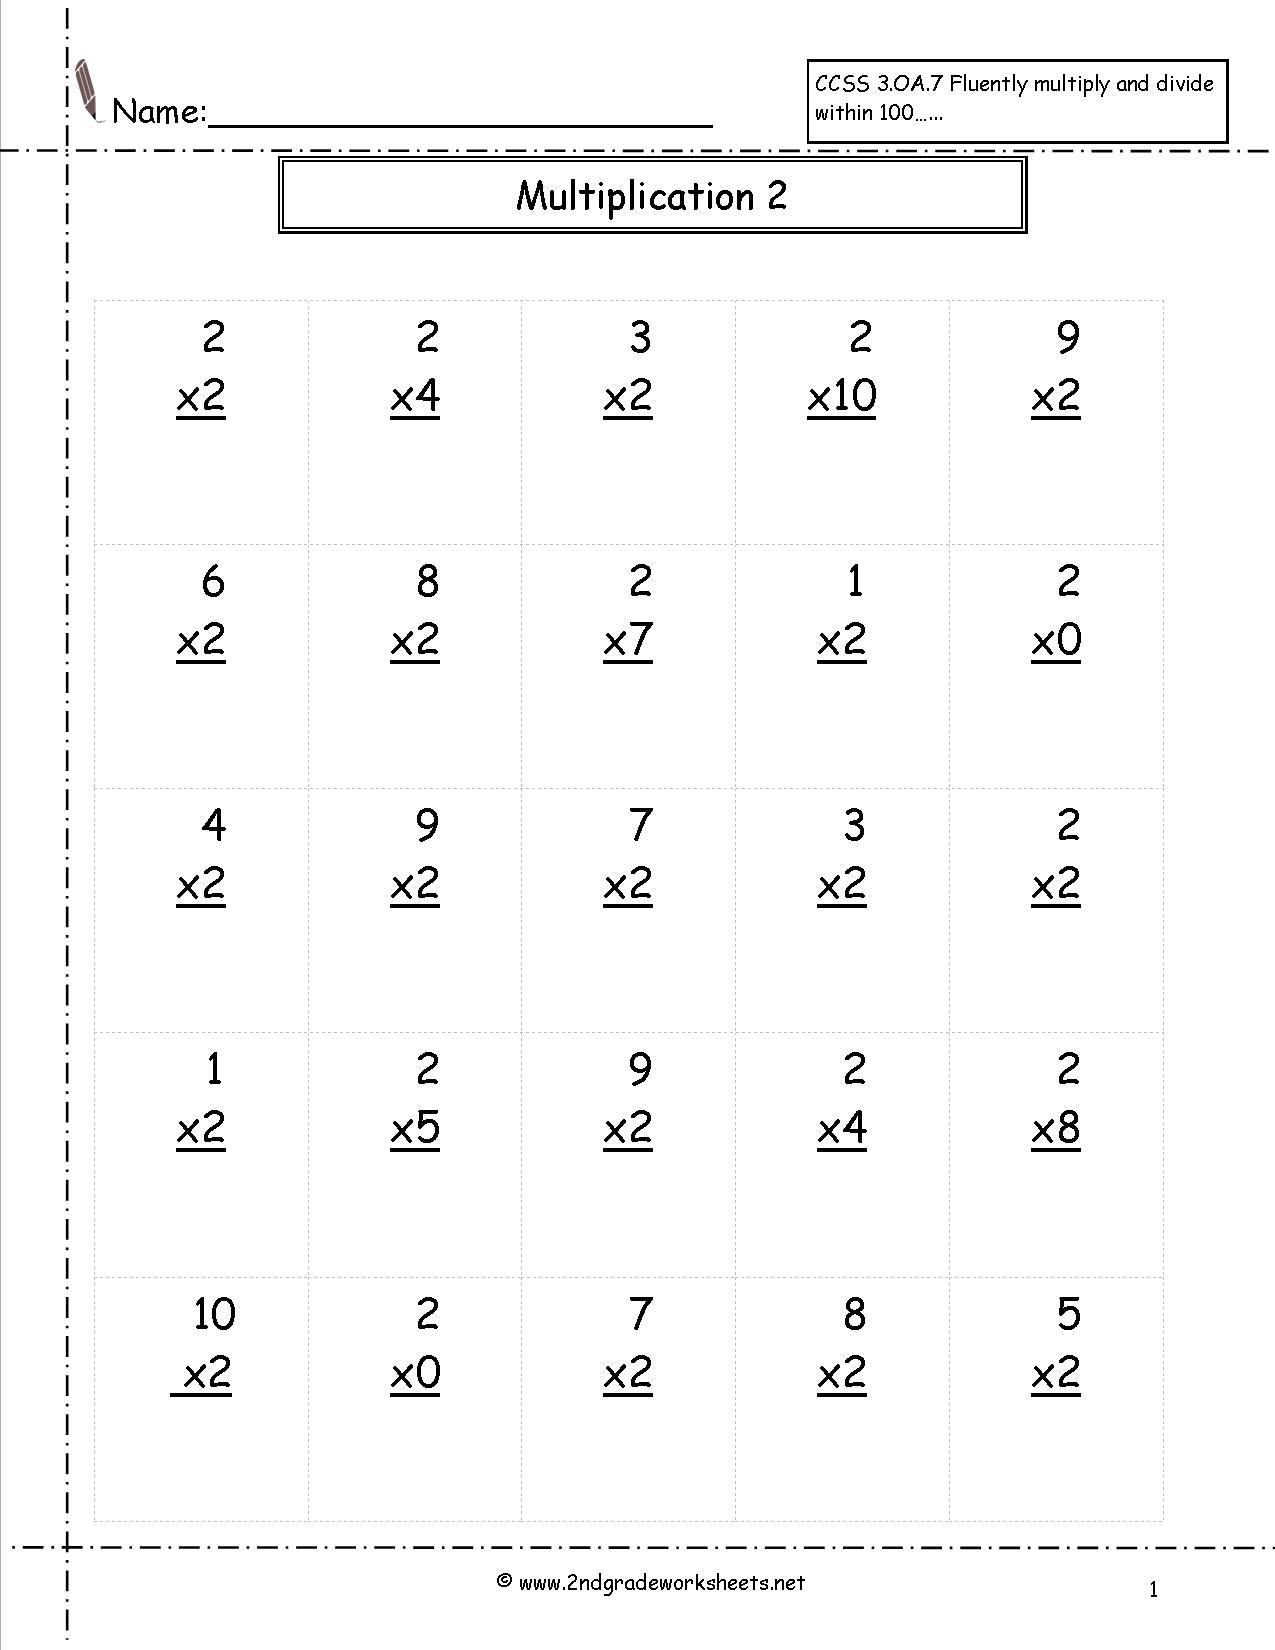 Multiplication Worksheet Multiples Of 2 | Printable with regard to Multiplication Worksheets 2S